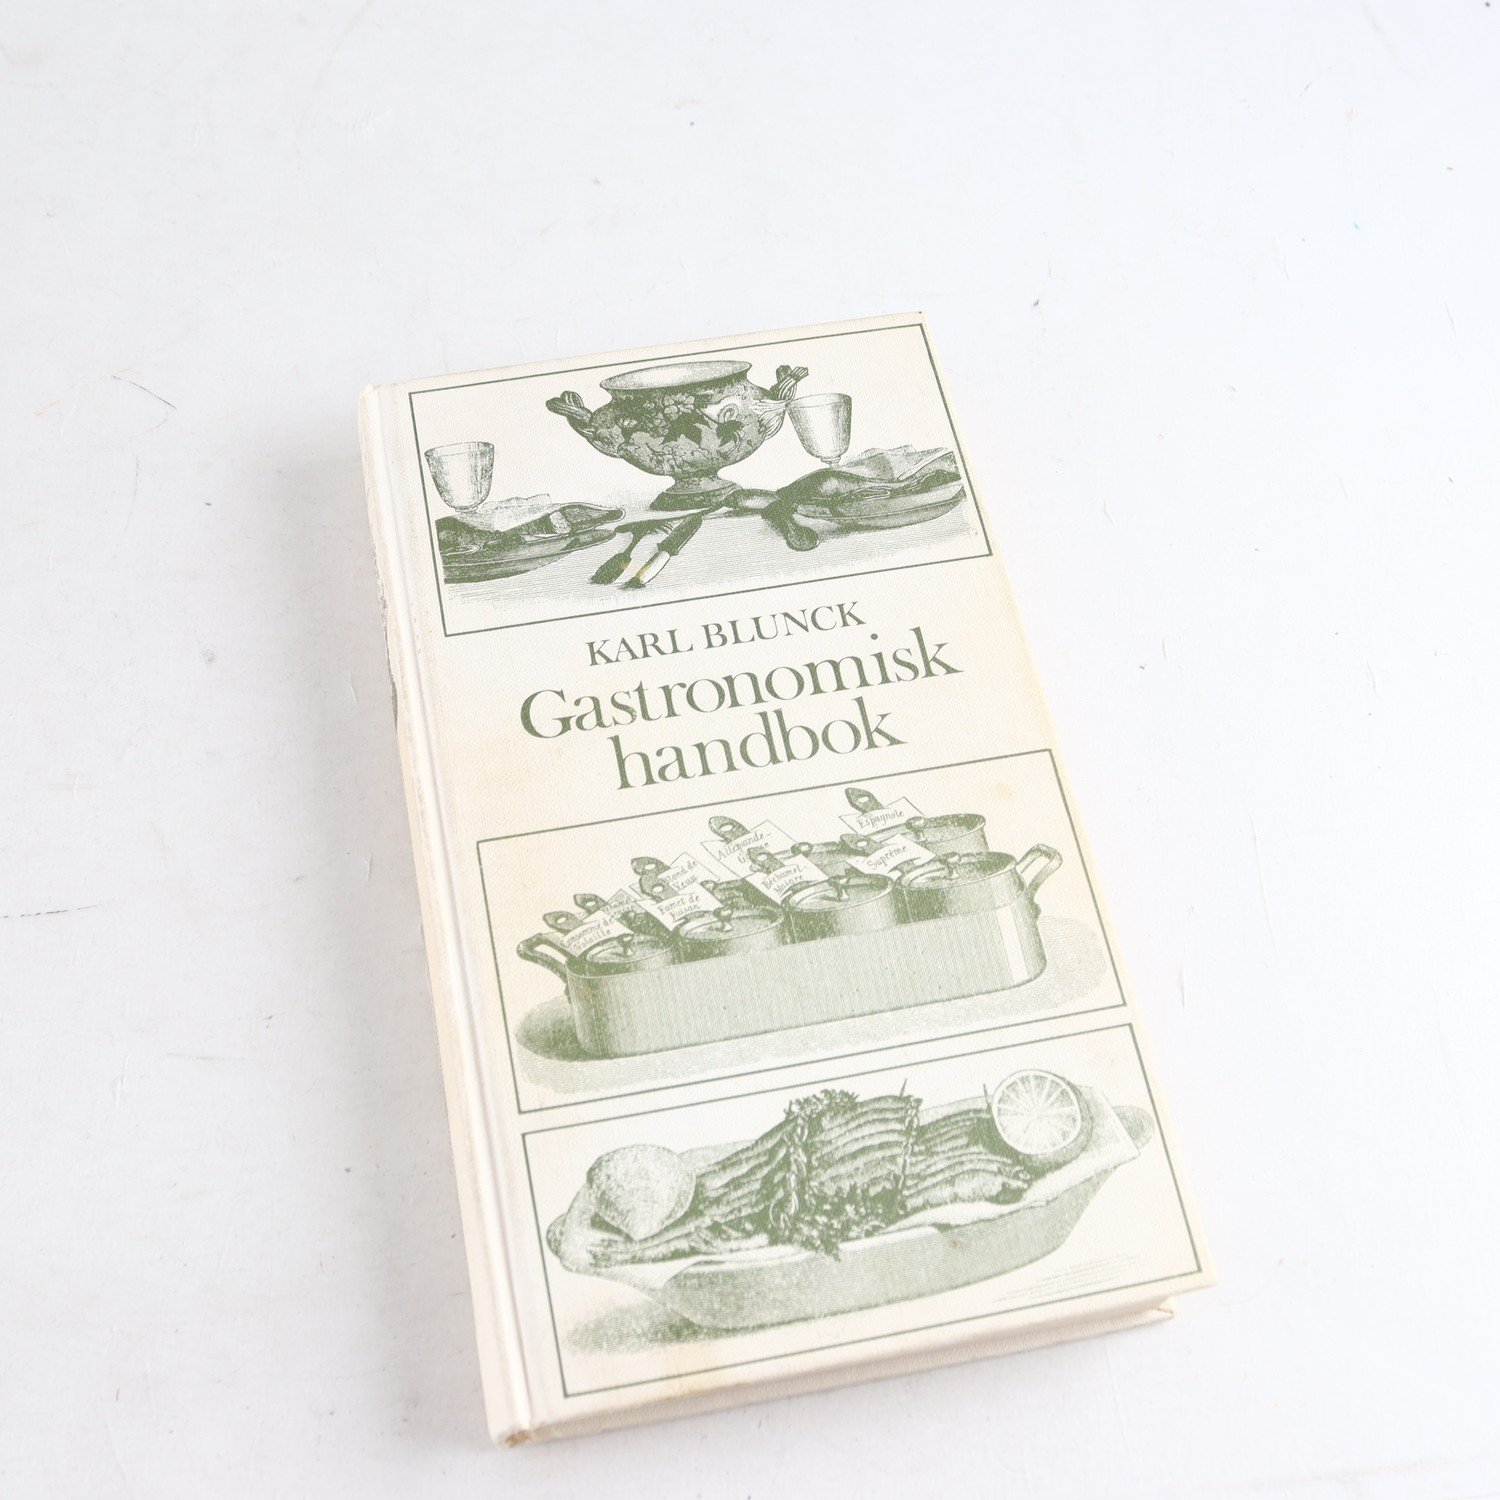 Karl Blunck, Gastronomisk handbok